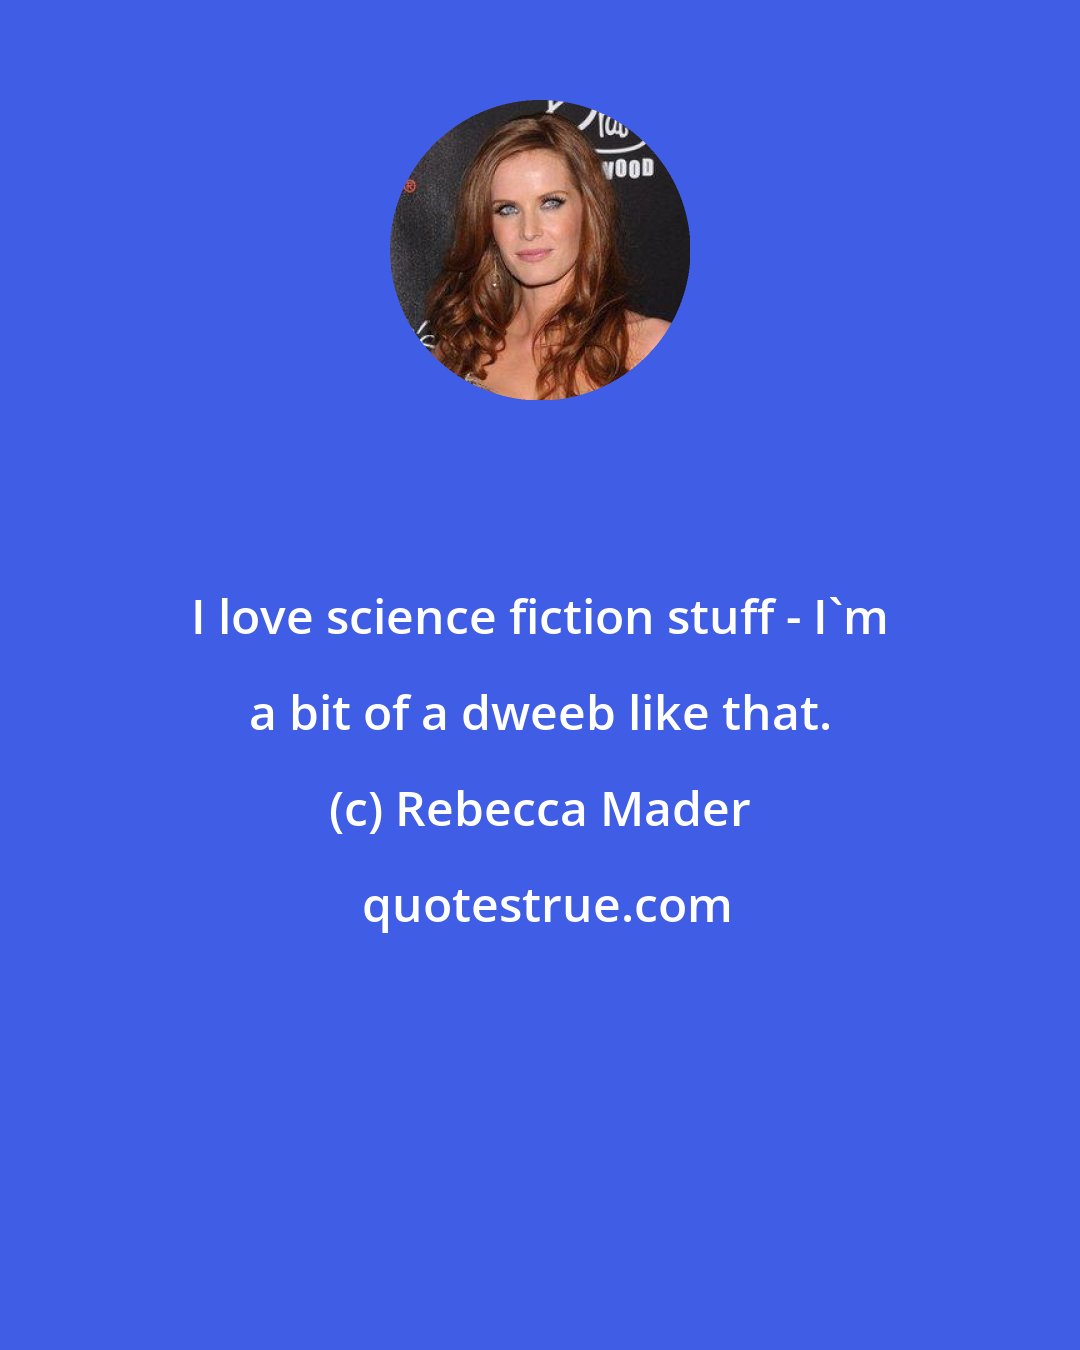 Rebecca Mader: I love science fiction stuff - I'm a bit of a dweeb like that.